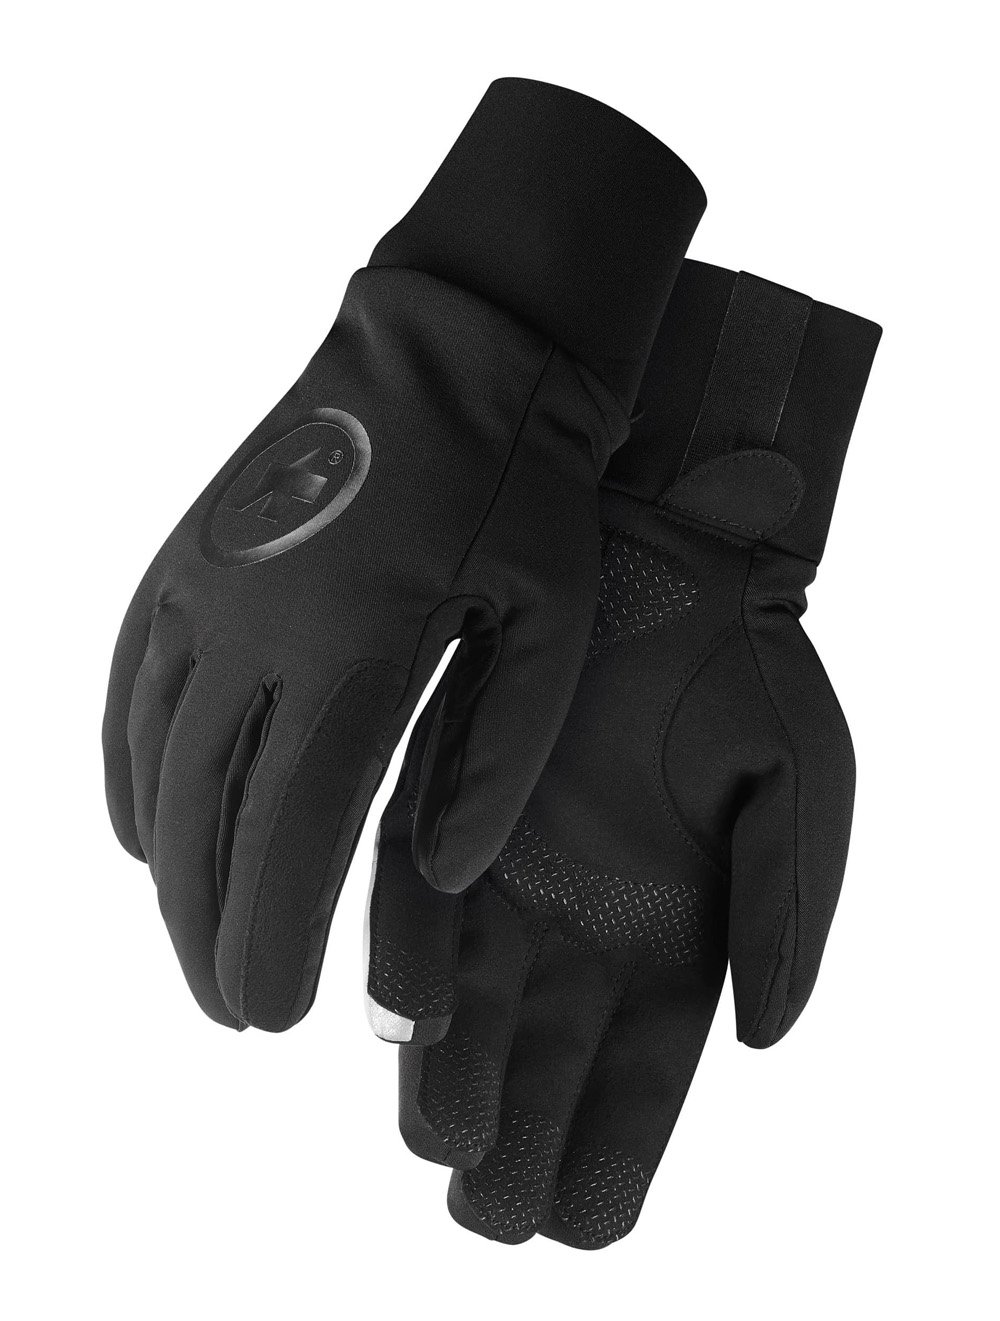 Ultraz Winter Bikable Gloves - Assos Cycle